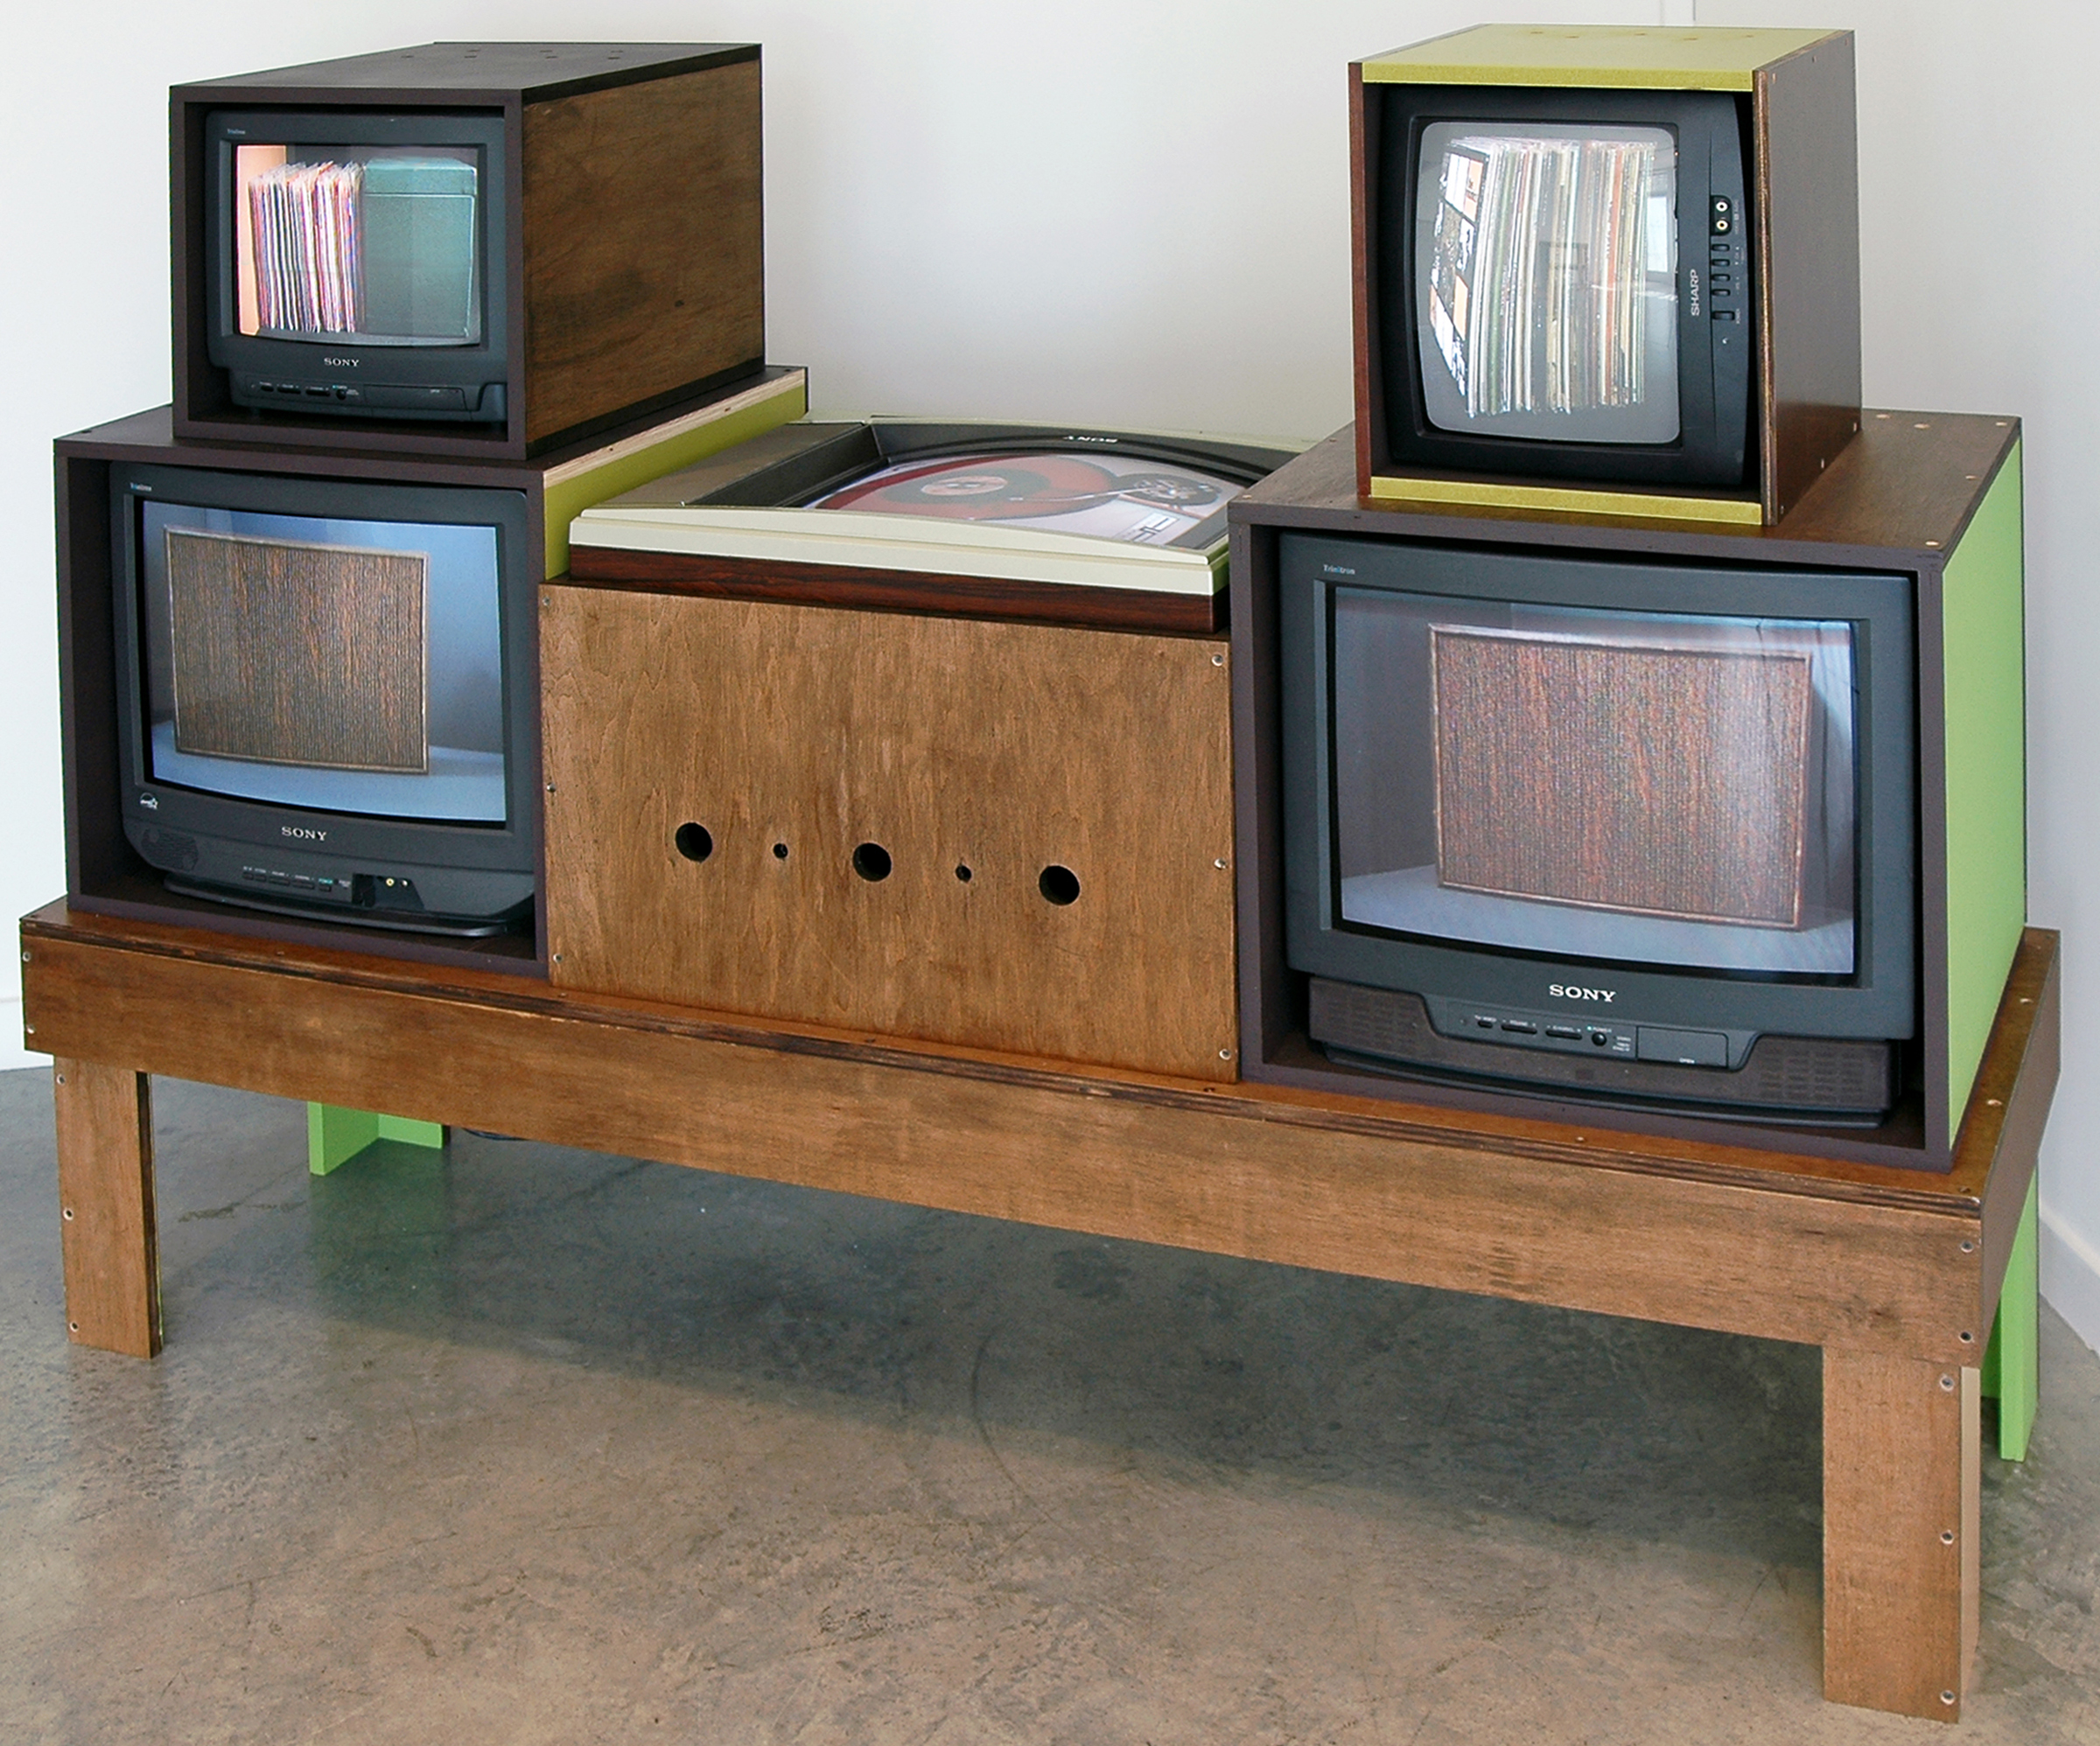   JOSHUA PIEPER   Video Stereo , CRT monitors, RF modulators, DVD players, plywood and paint, 54" x 72" x 22", 2012 